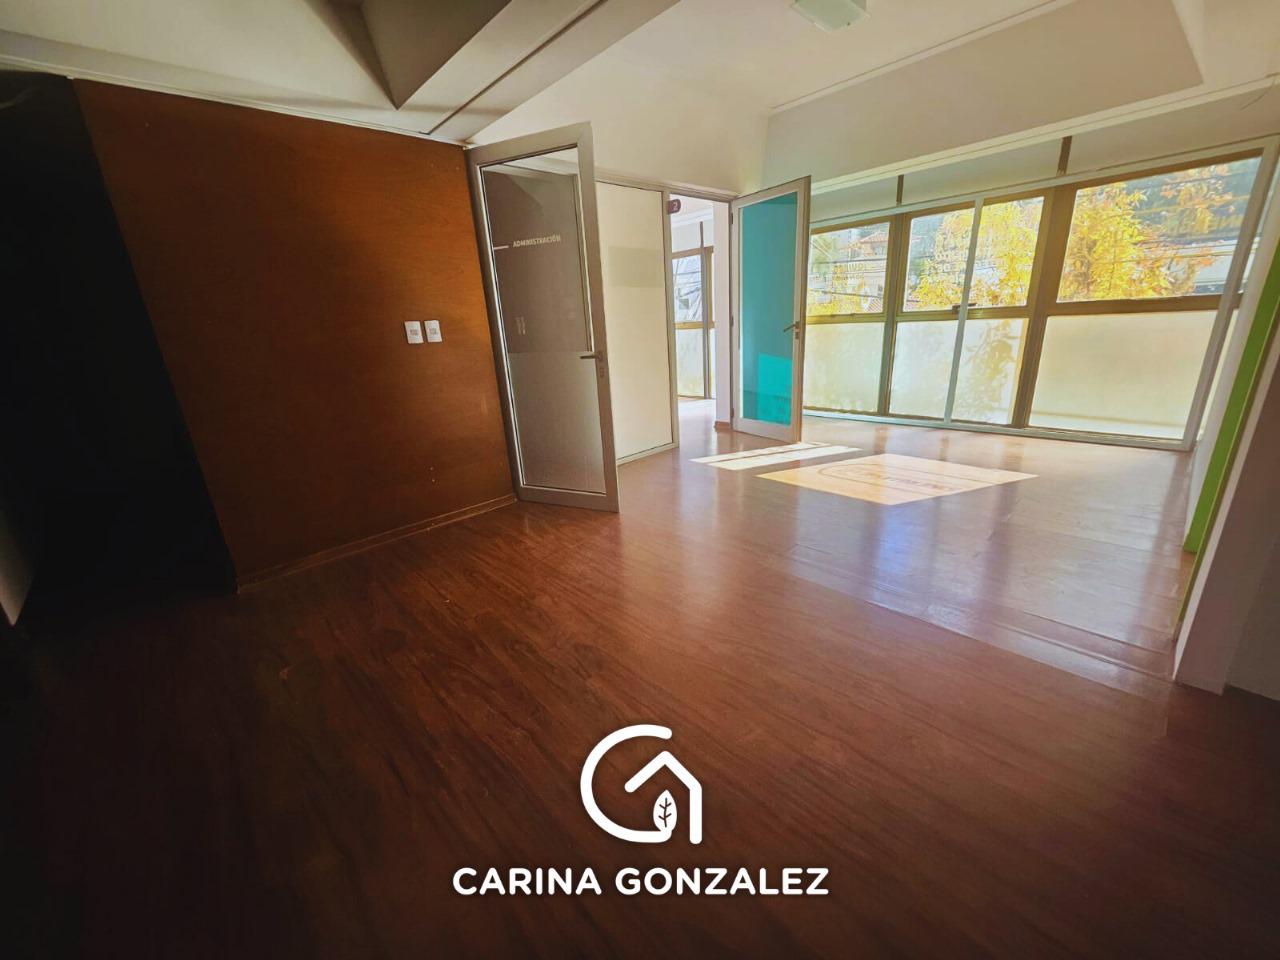 #5062401 | Rental | Office | Capital Federal (Carina Gonzalez - Servicios Inmobiliarios)